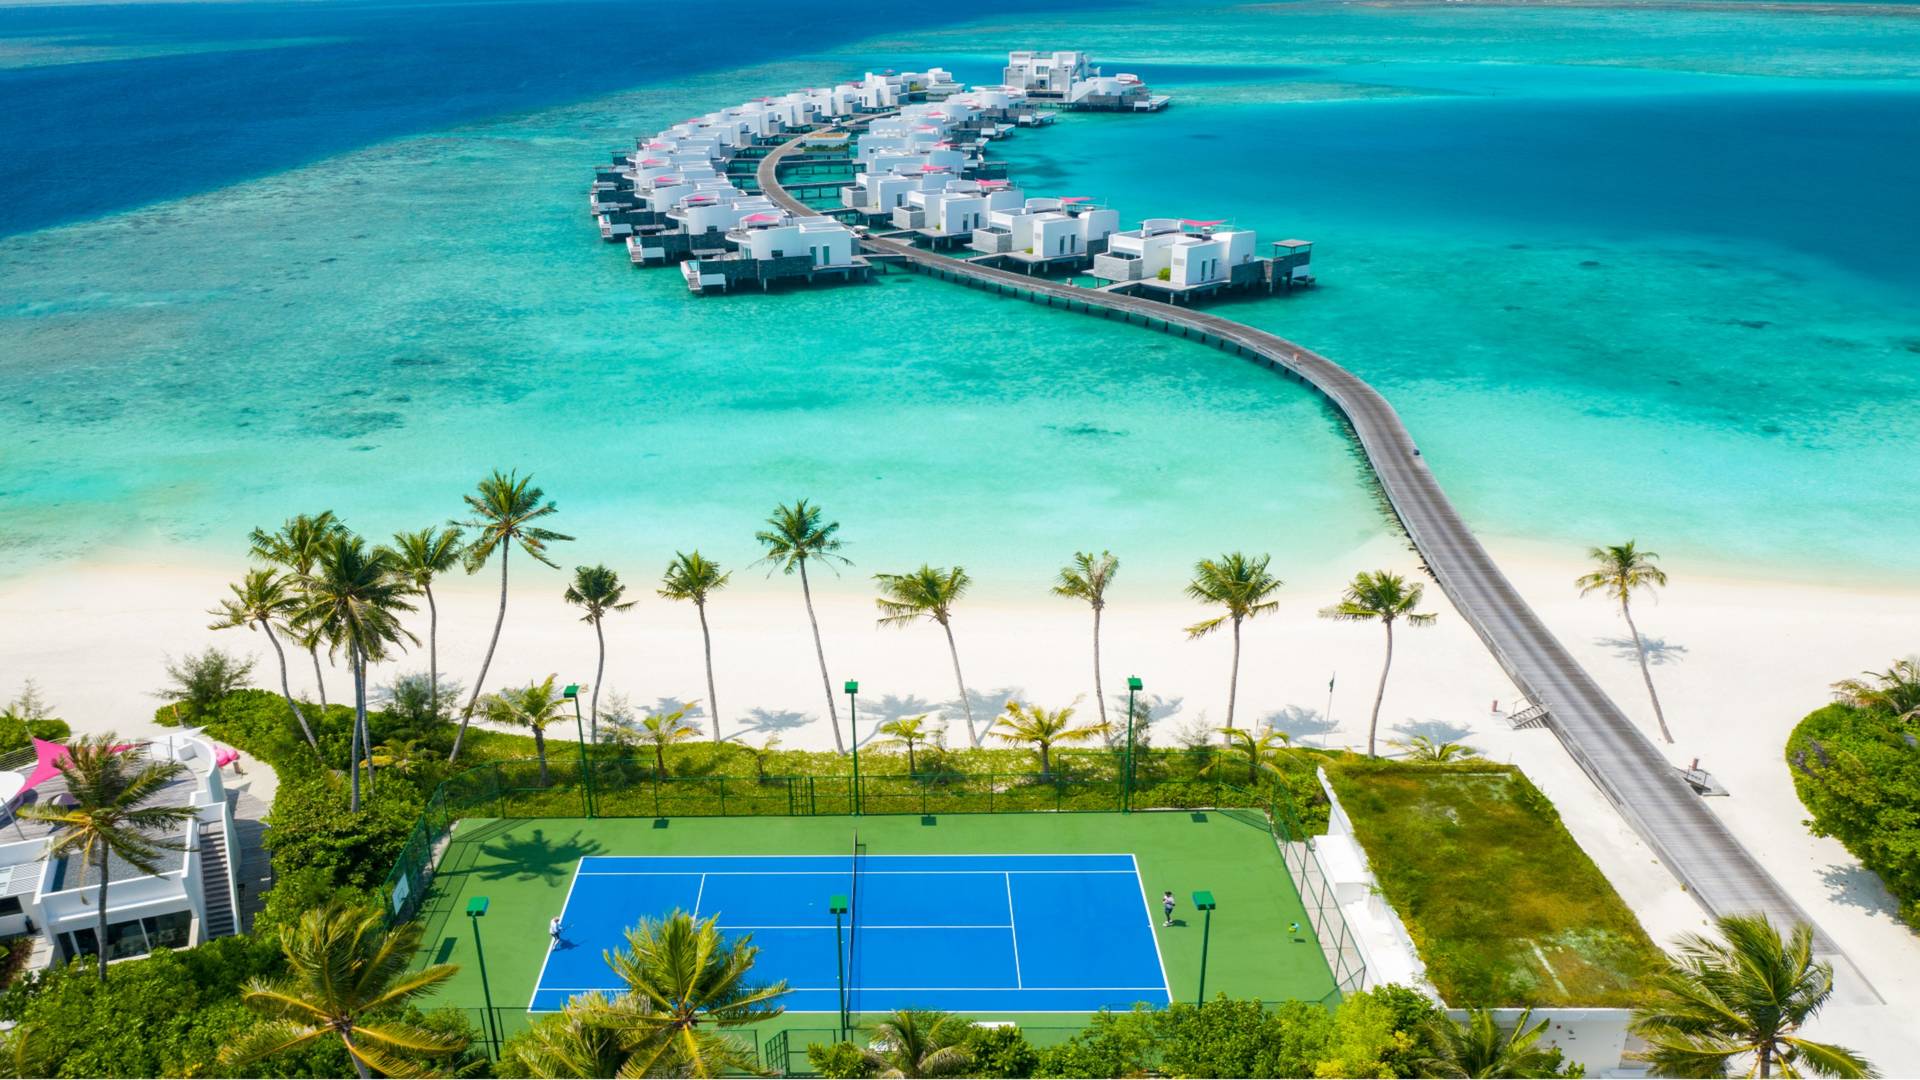 Aerial view of tennis court at Jumeirah Maldives Olhahali Island